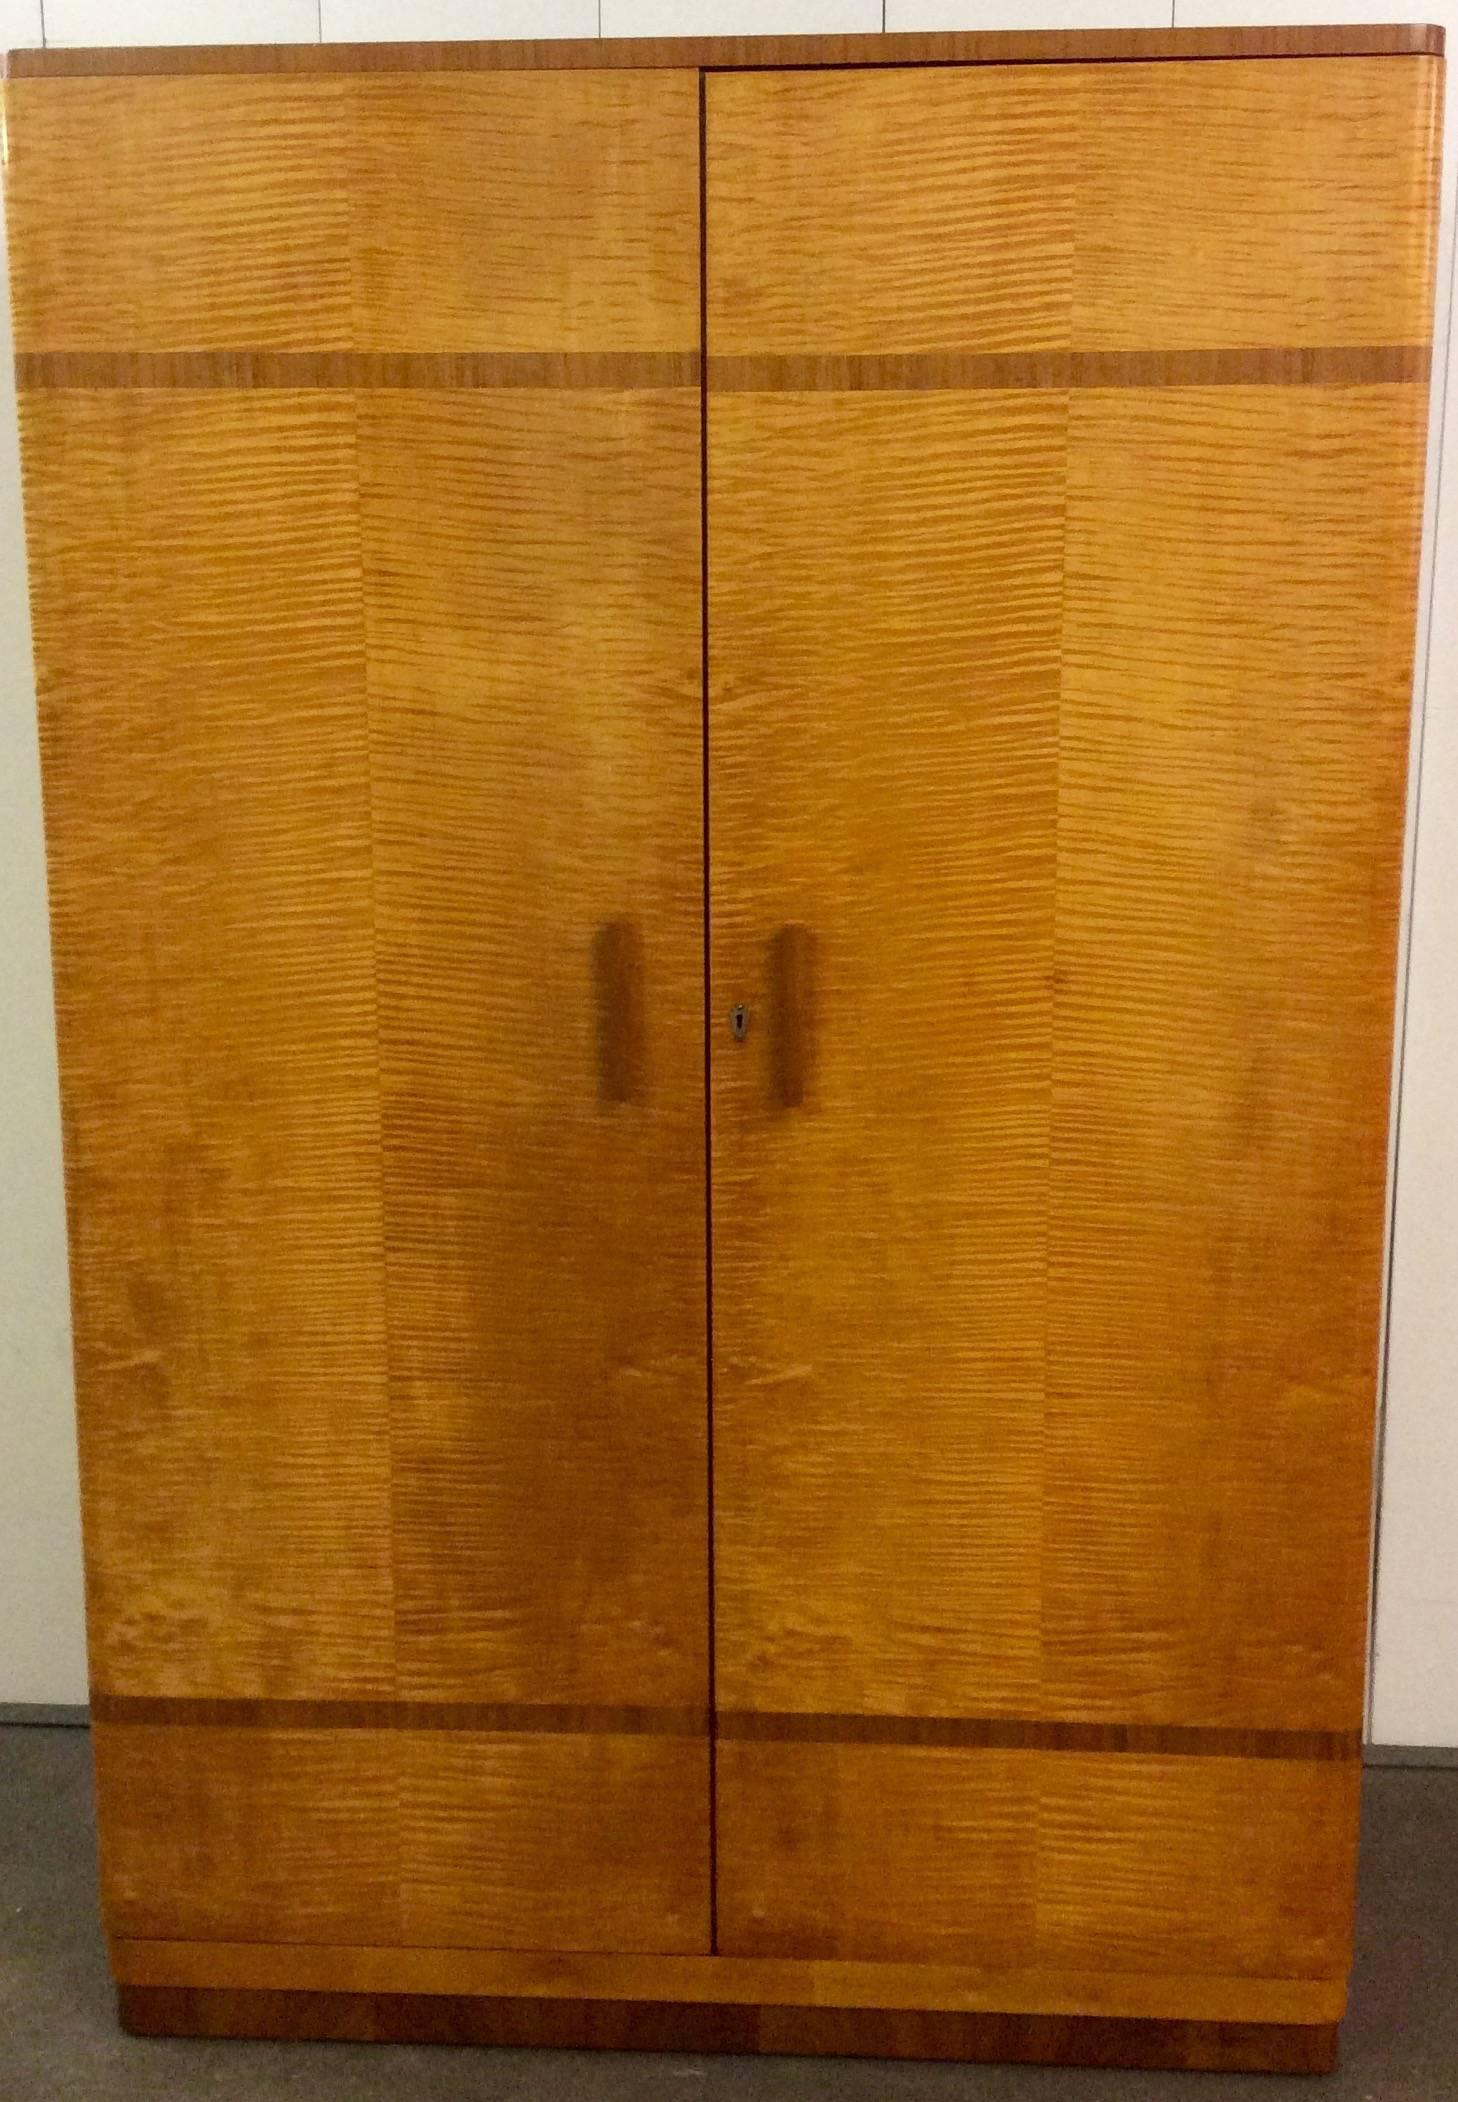 Beautiful Art Deco wardrobe, satin maple with walnut banding.
Measures: 187 cm H, 122 cm W, 53 cm D.
British, circa 1930.